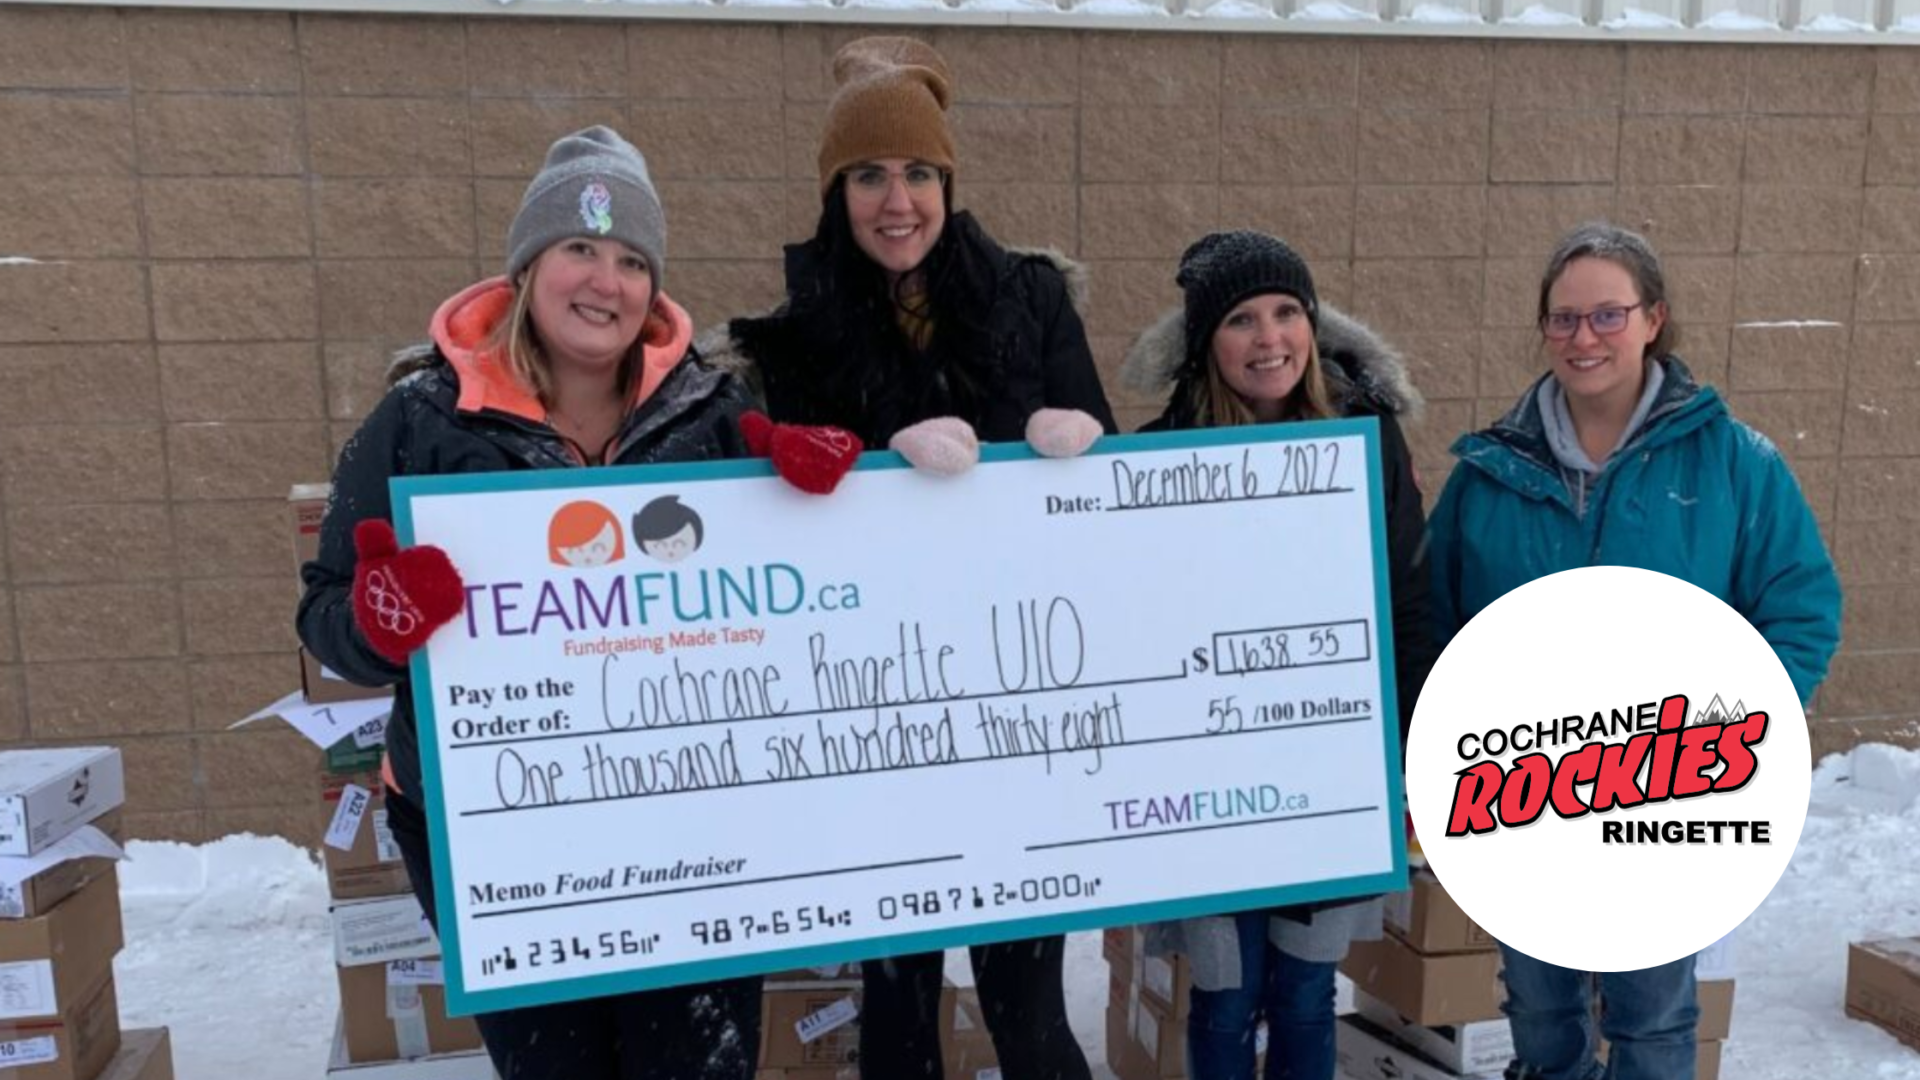 Cochrane Ringette Food Fundraising Raises Over $1,500 for U10 Team